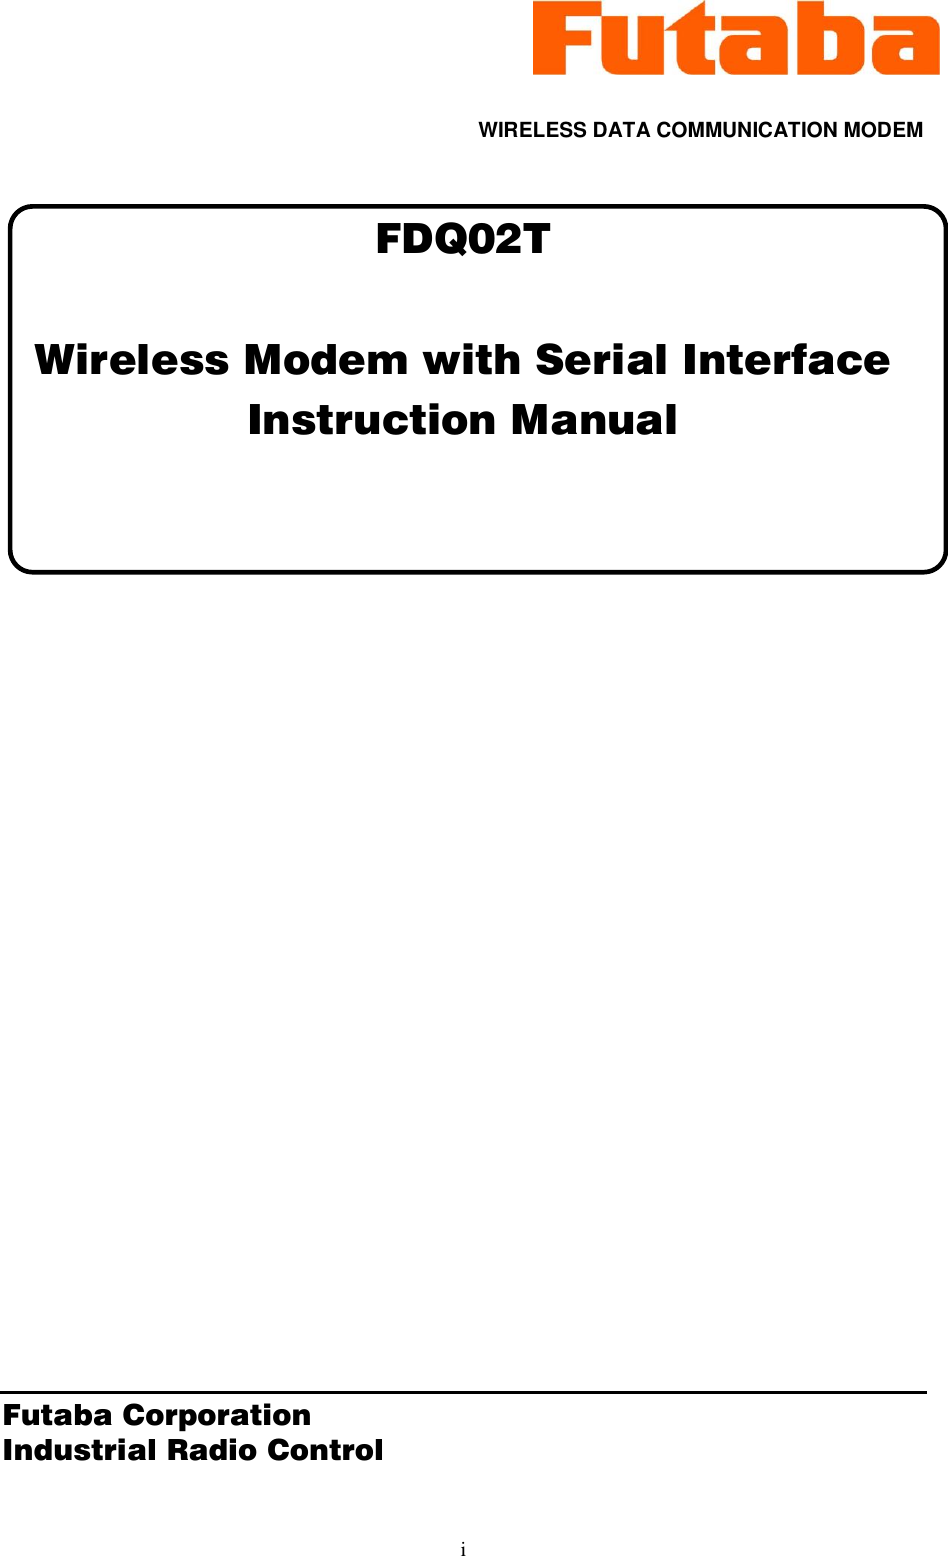  i  WIRELESS DATA COMMUNICATION MODEM  FDQ02T   Wireless Modem with Serial Interface Instruction Manual                      Futaba Corporation Industrial Radio Control 